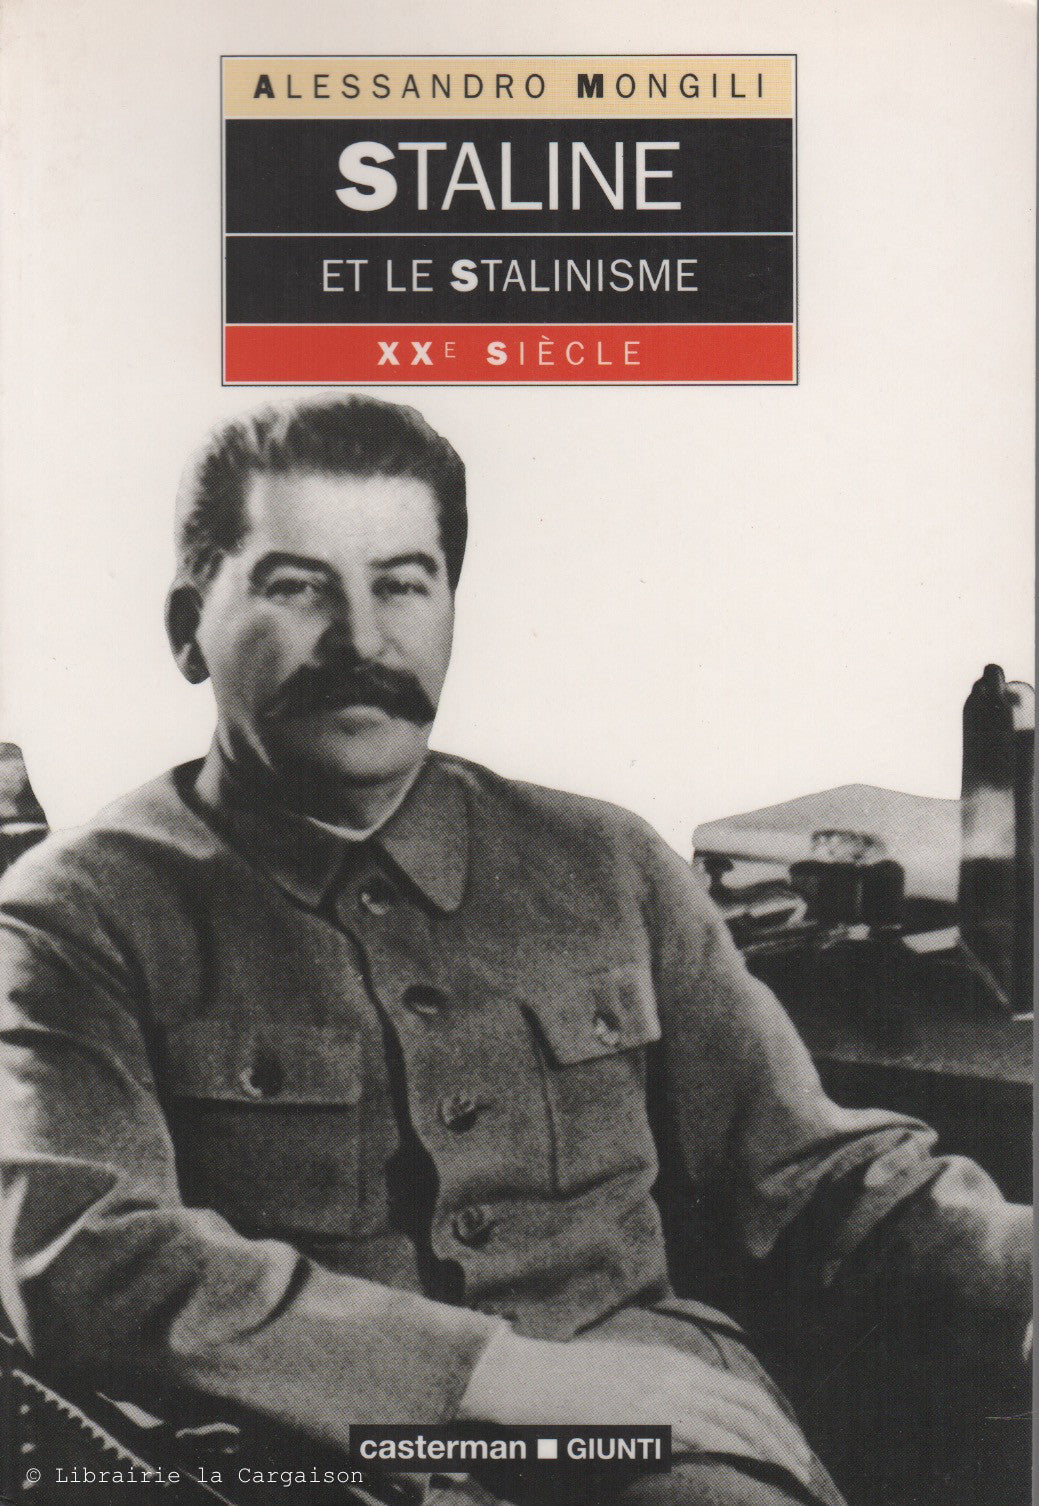 MONGILI, ALESSANDRO. Staline et le stalinisme